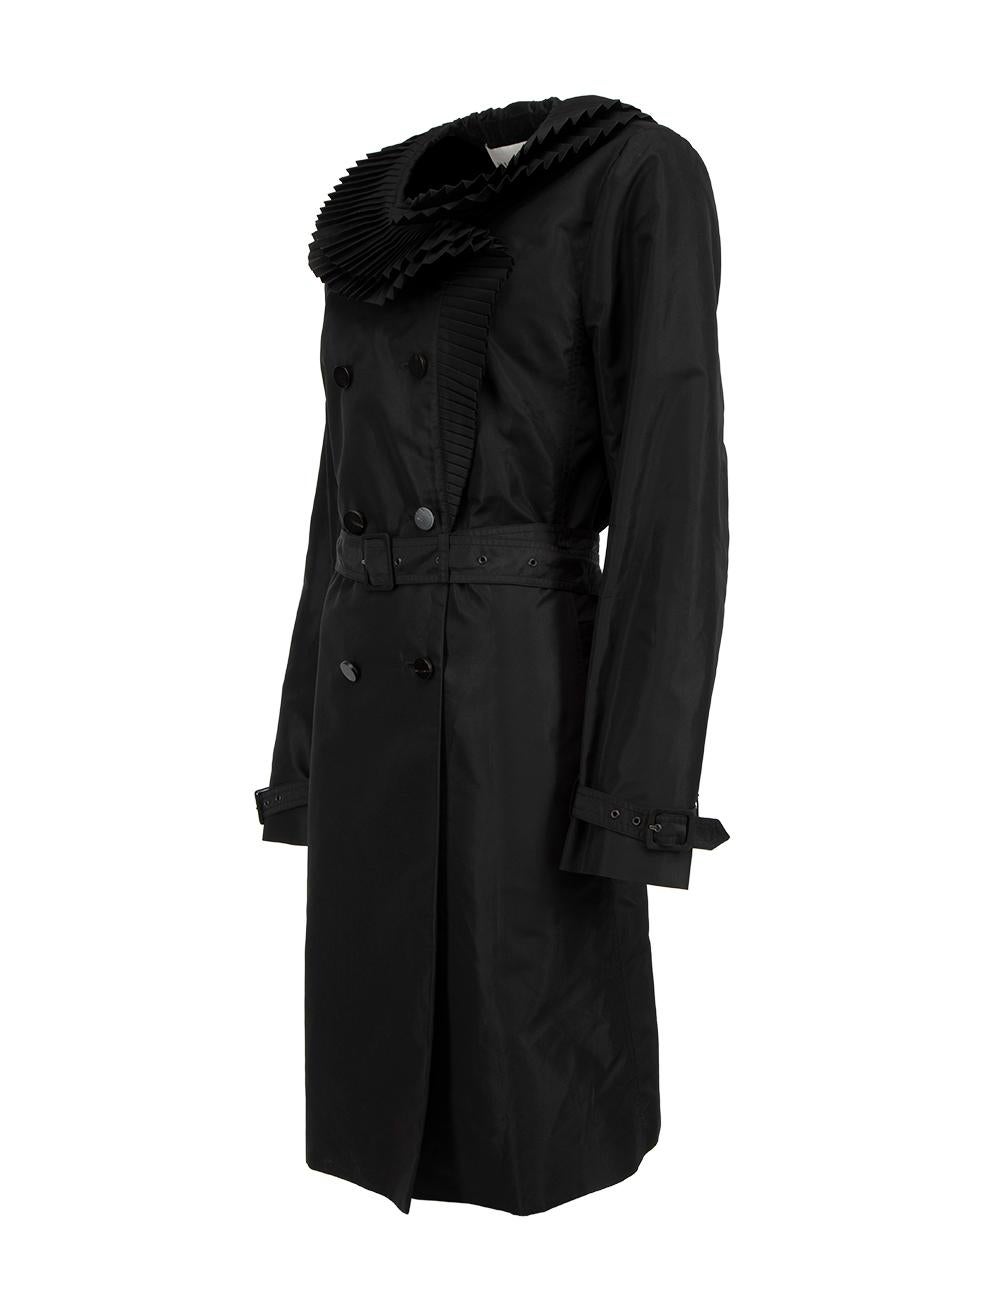 Pre-Loved Valentino Garavani Women's Black Silk Pleated Trim Belted Rain Coat 1